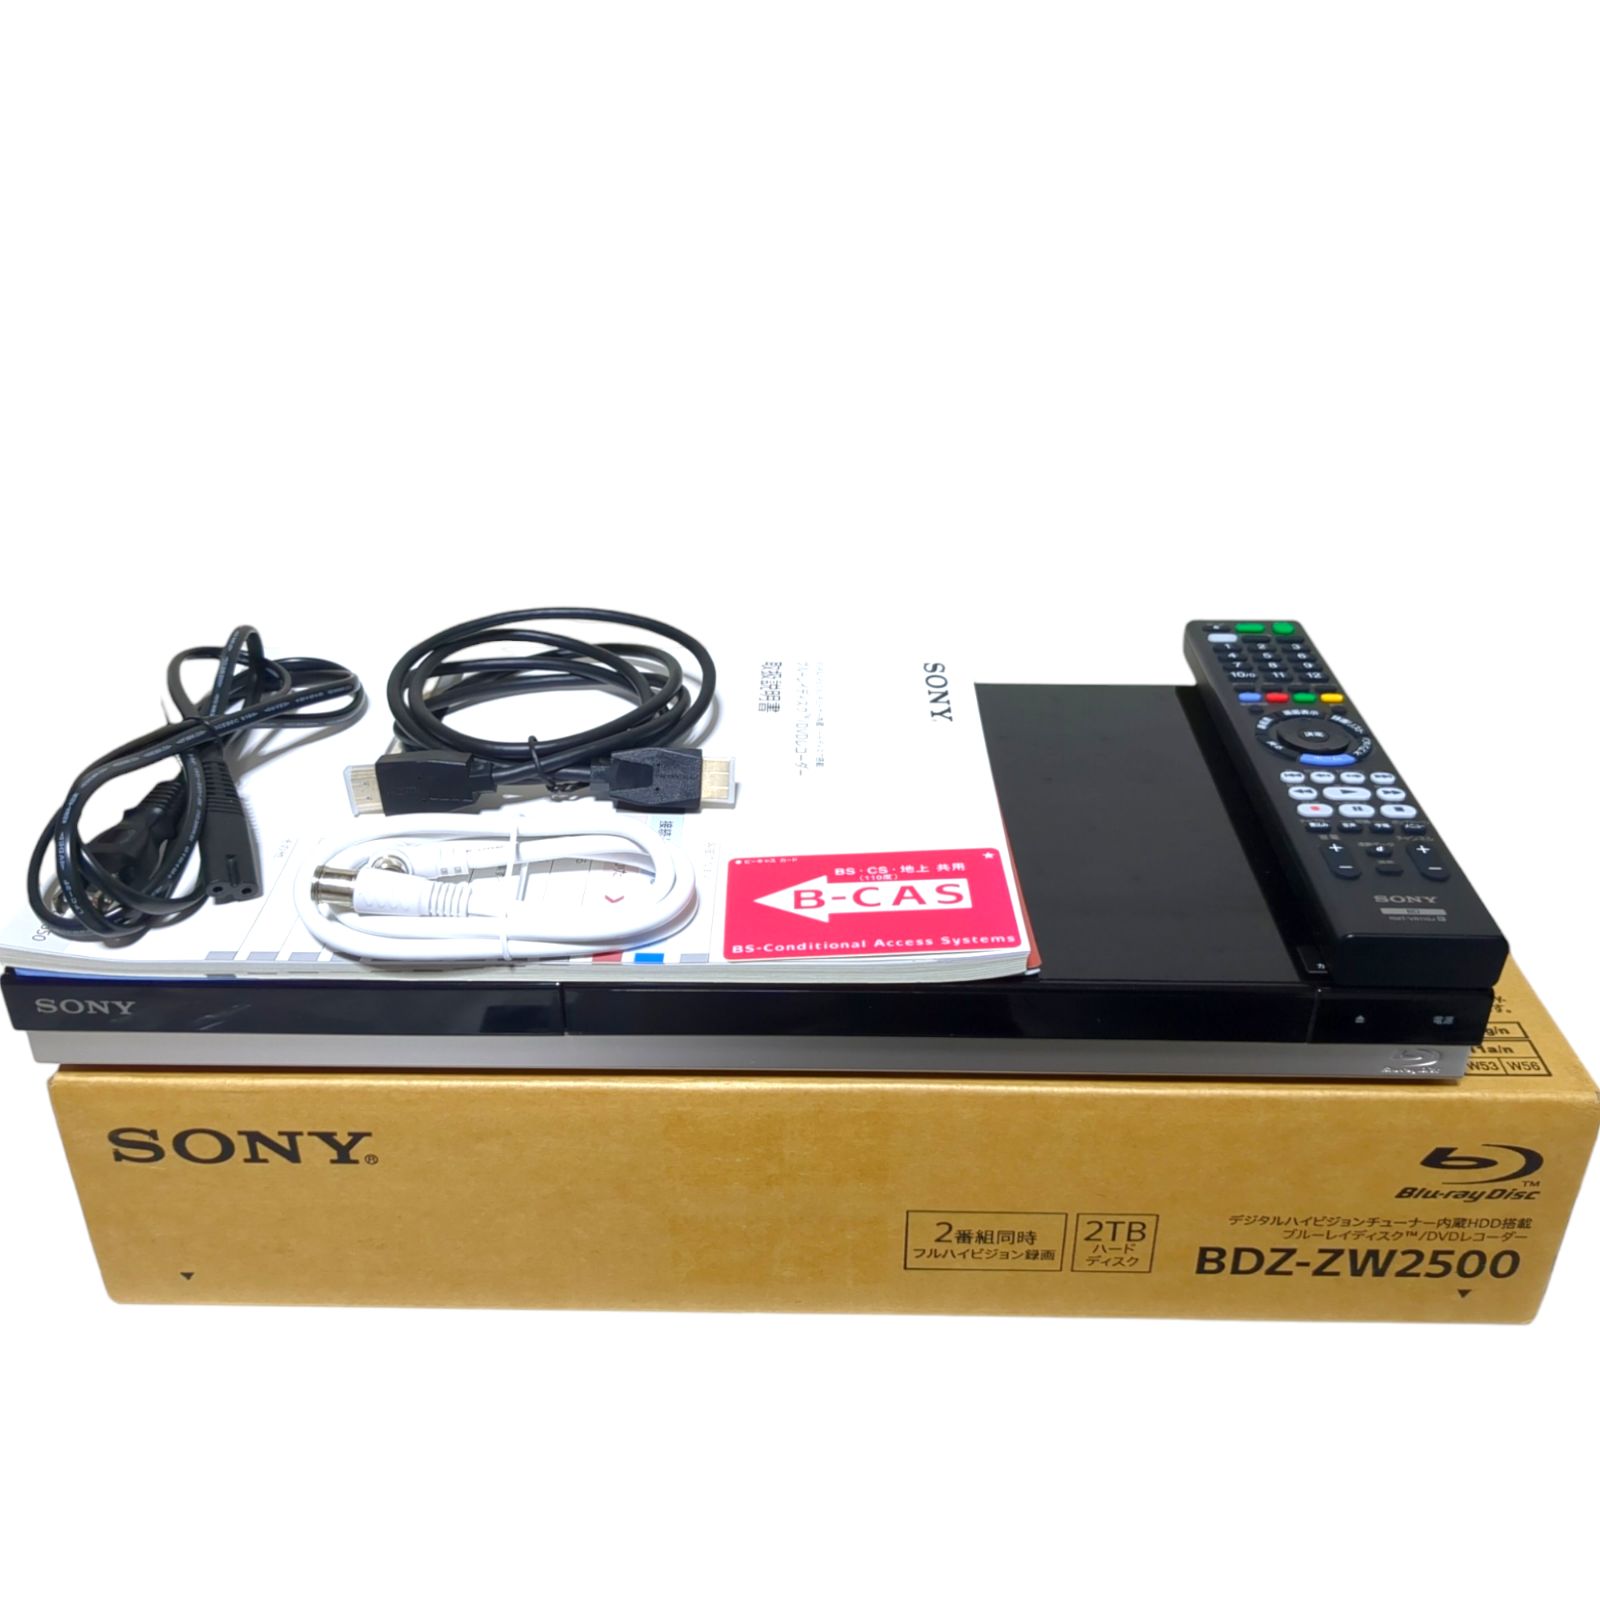 SONY】BDZ-FT2000 ブルーレイレコーダー 2T 3チューナー - テレビ/映像機器